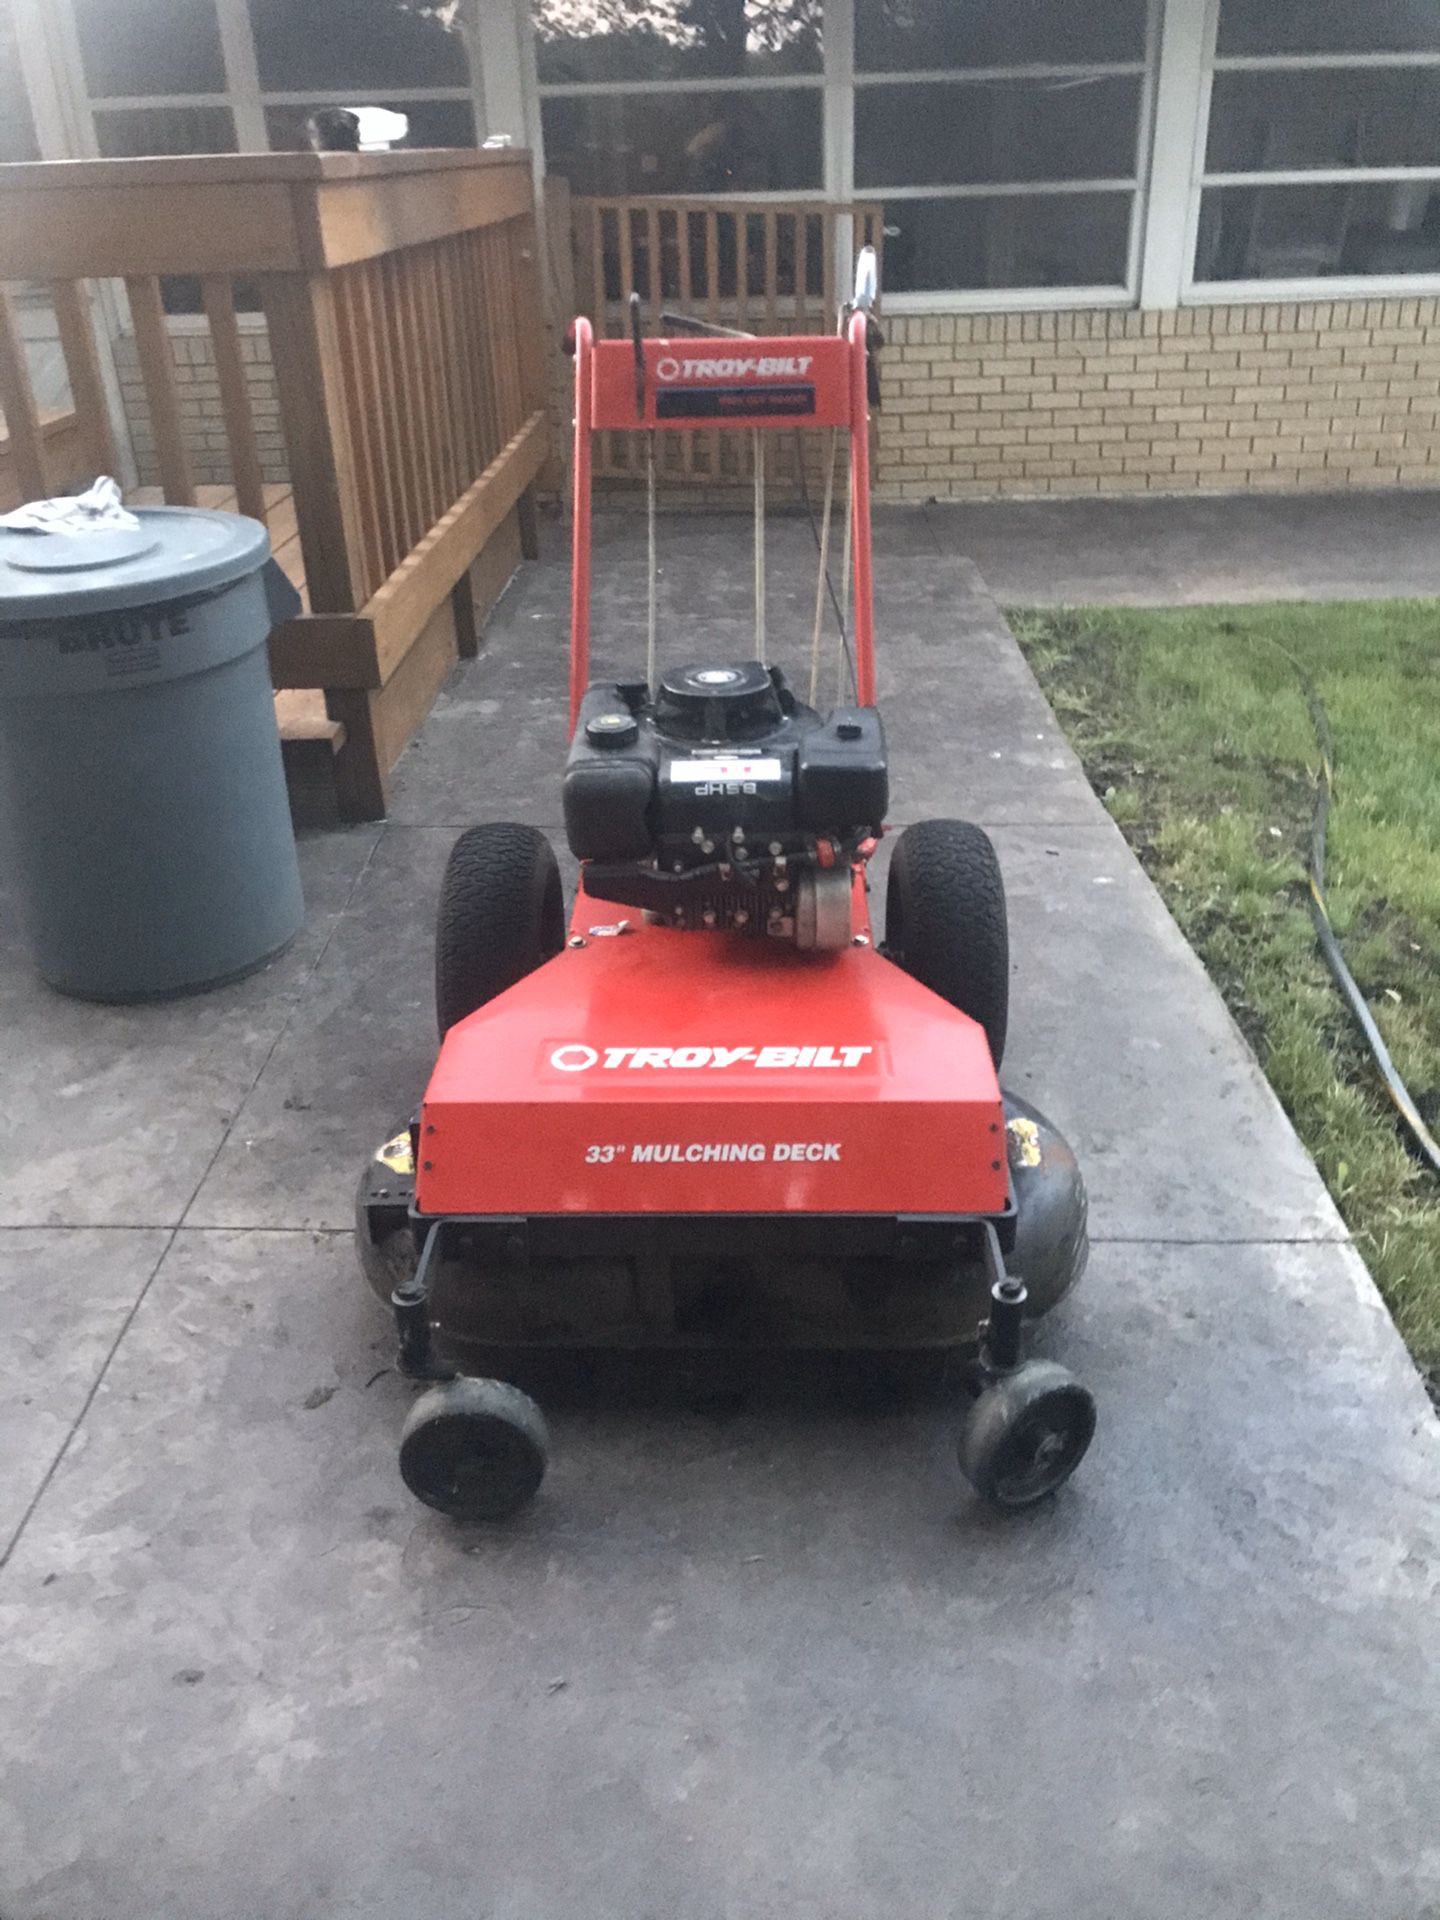 Troy-Bilt 33 inch lawn mower